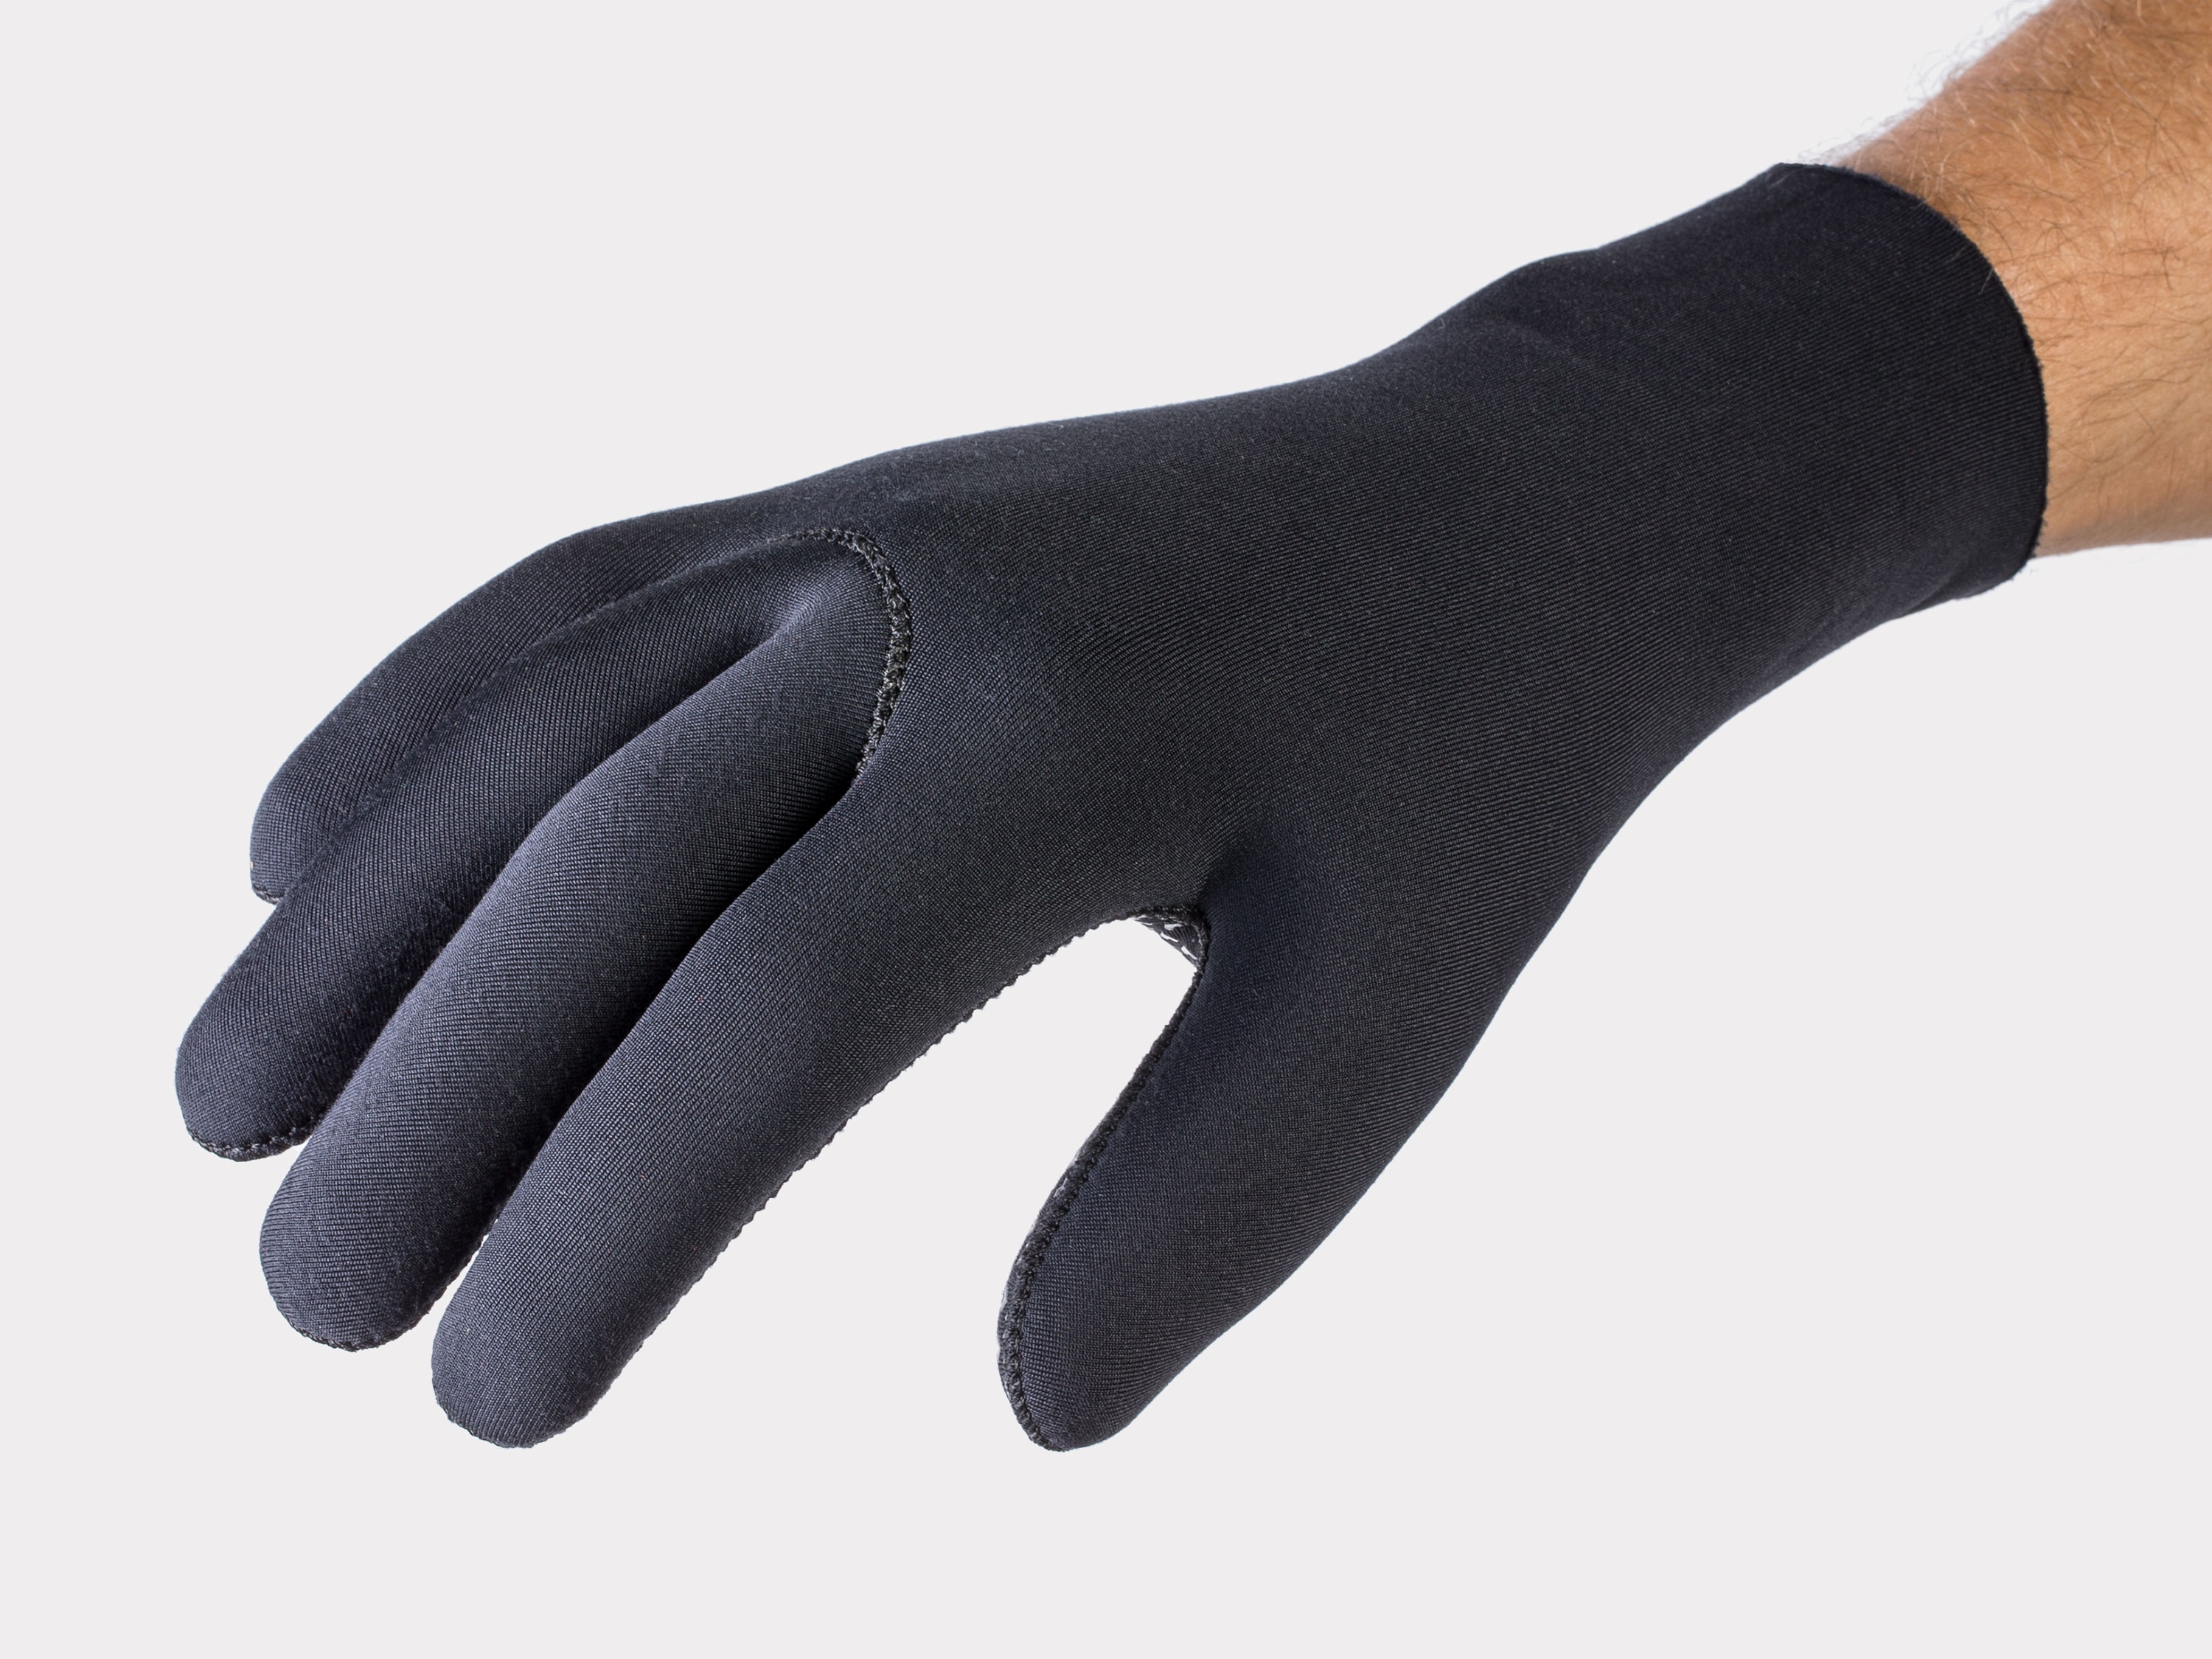 neoprene cycling gloves